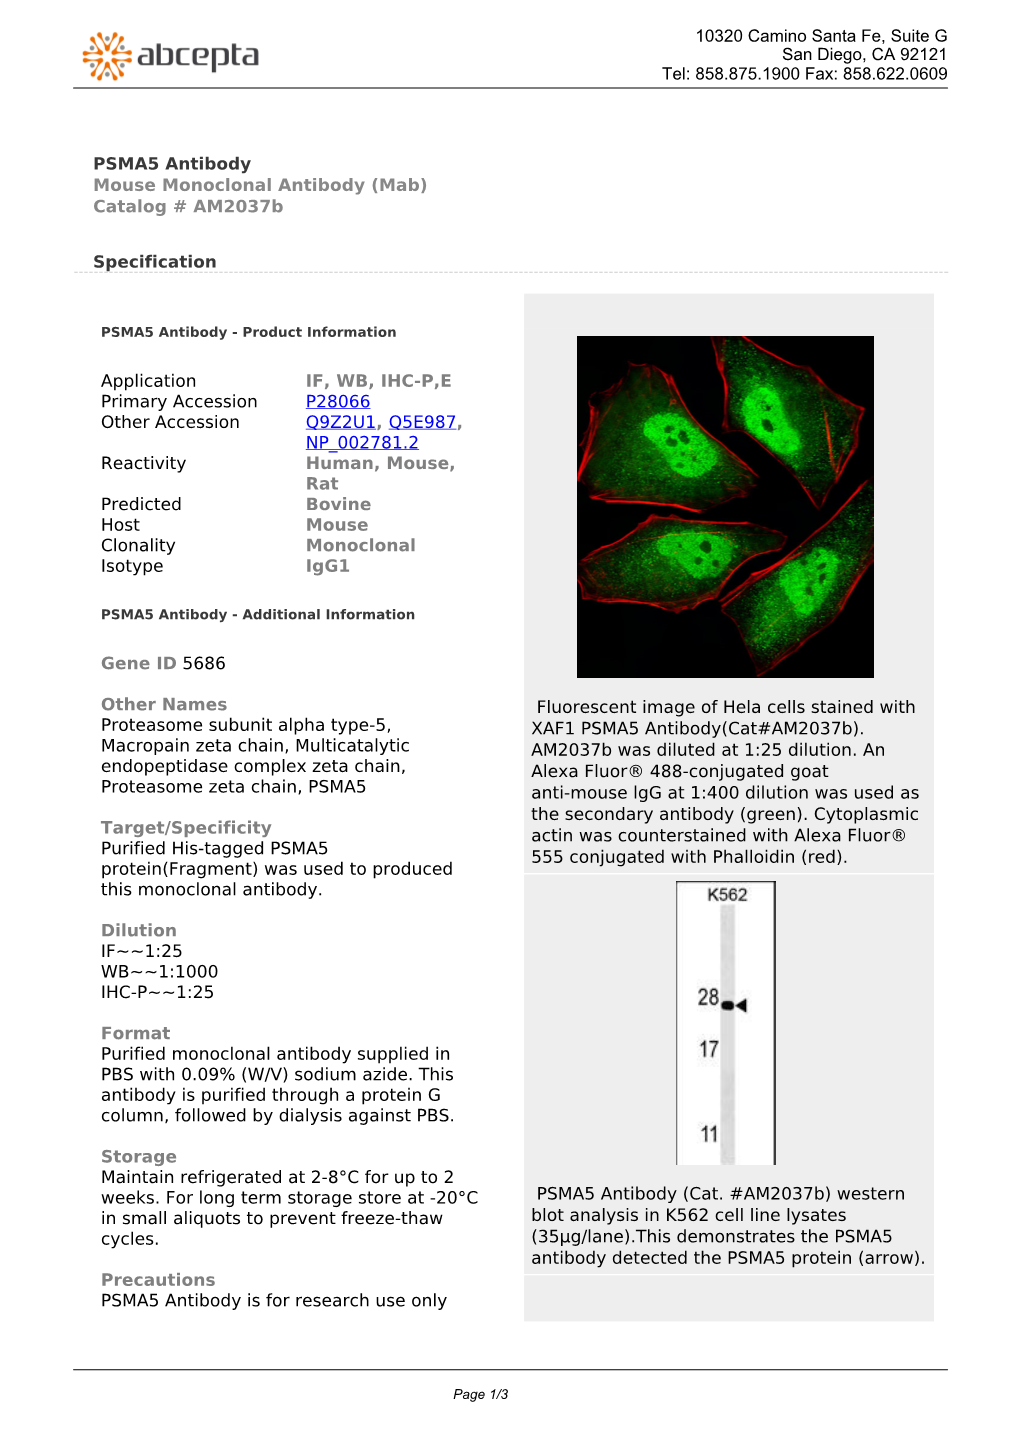 PSMA5 Antibody Mouse Monoclonal Antibody (Mab) Catalog # Am2037b